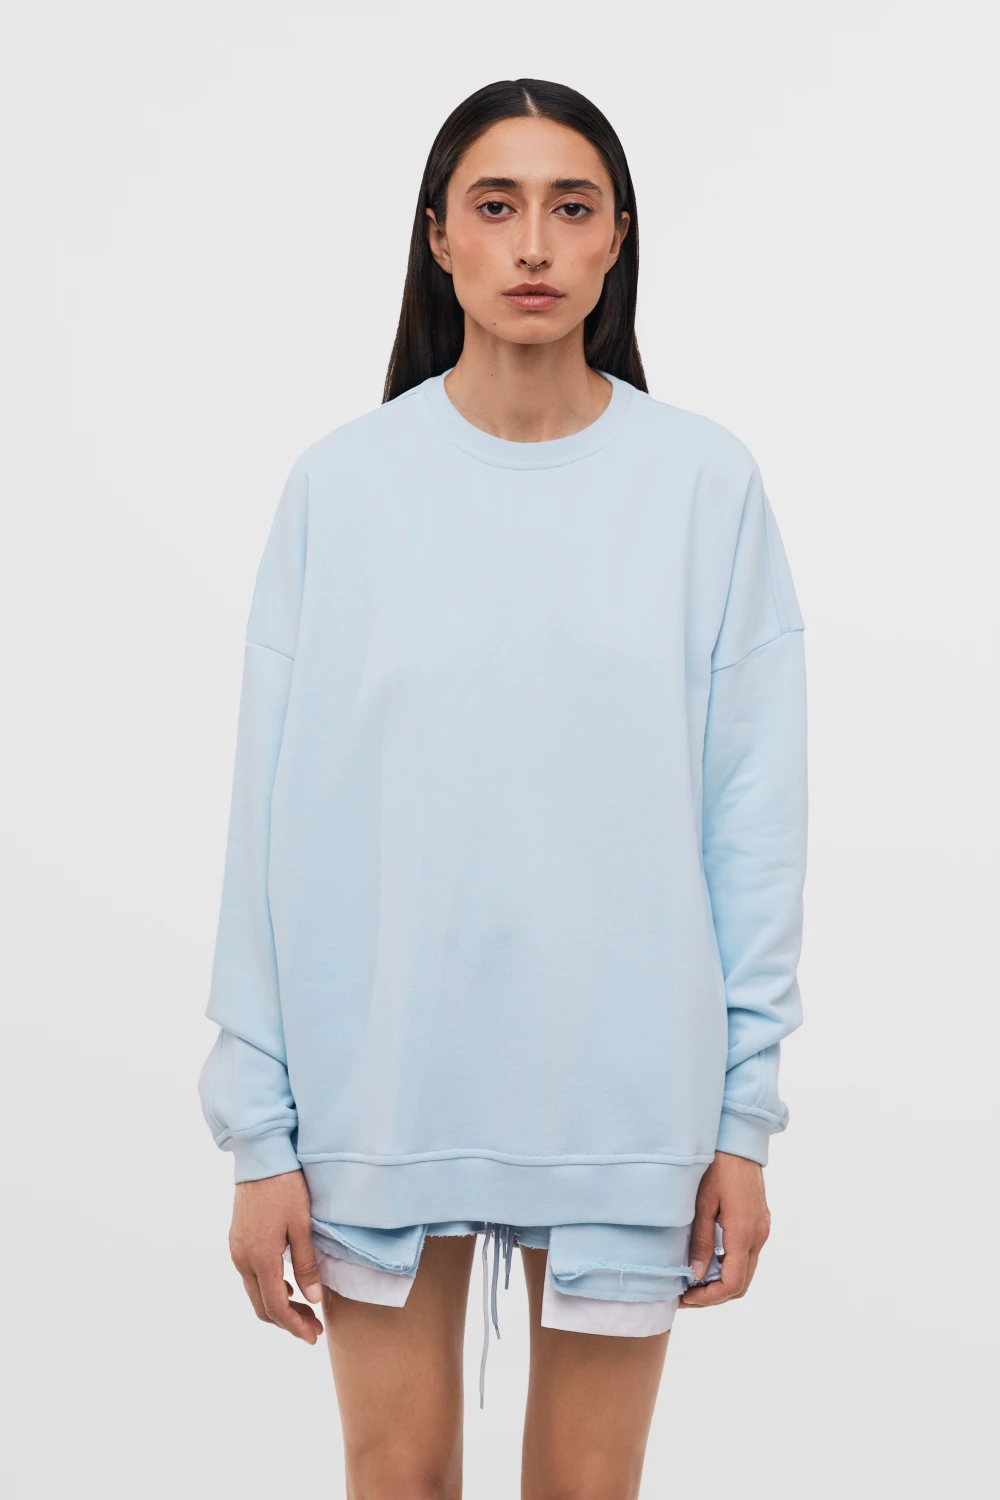 sweatshirt "basic" in blue color